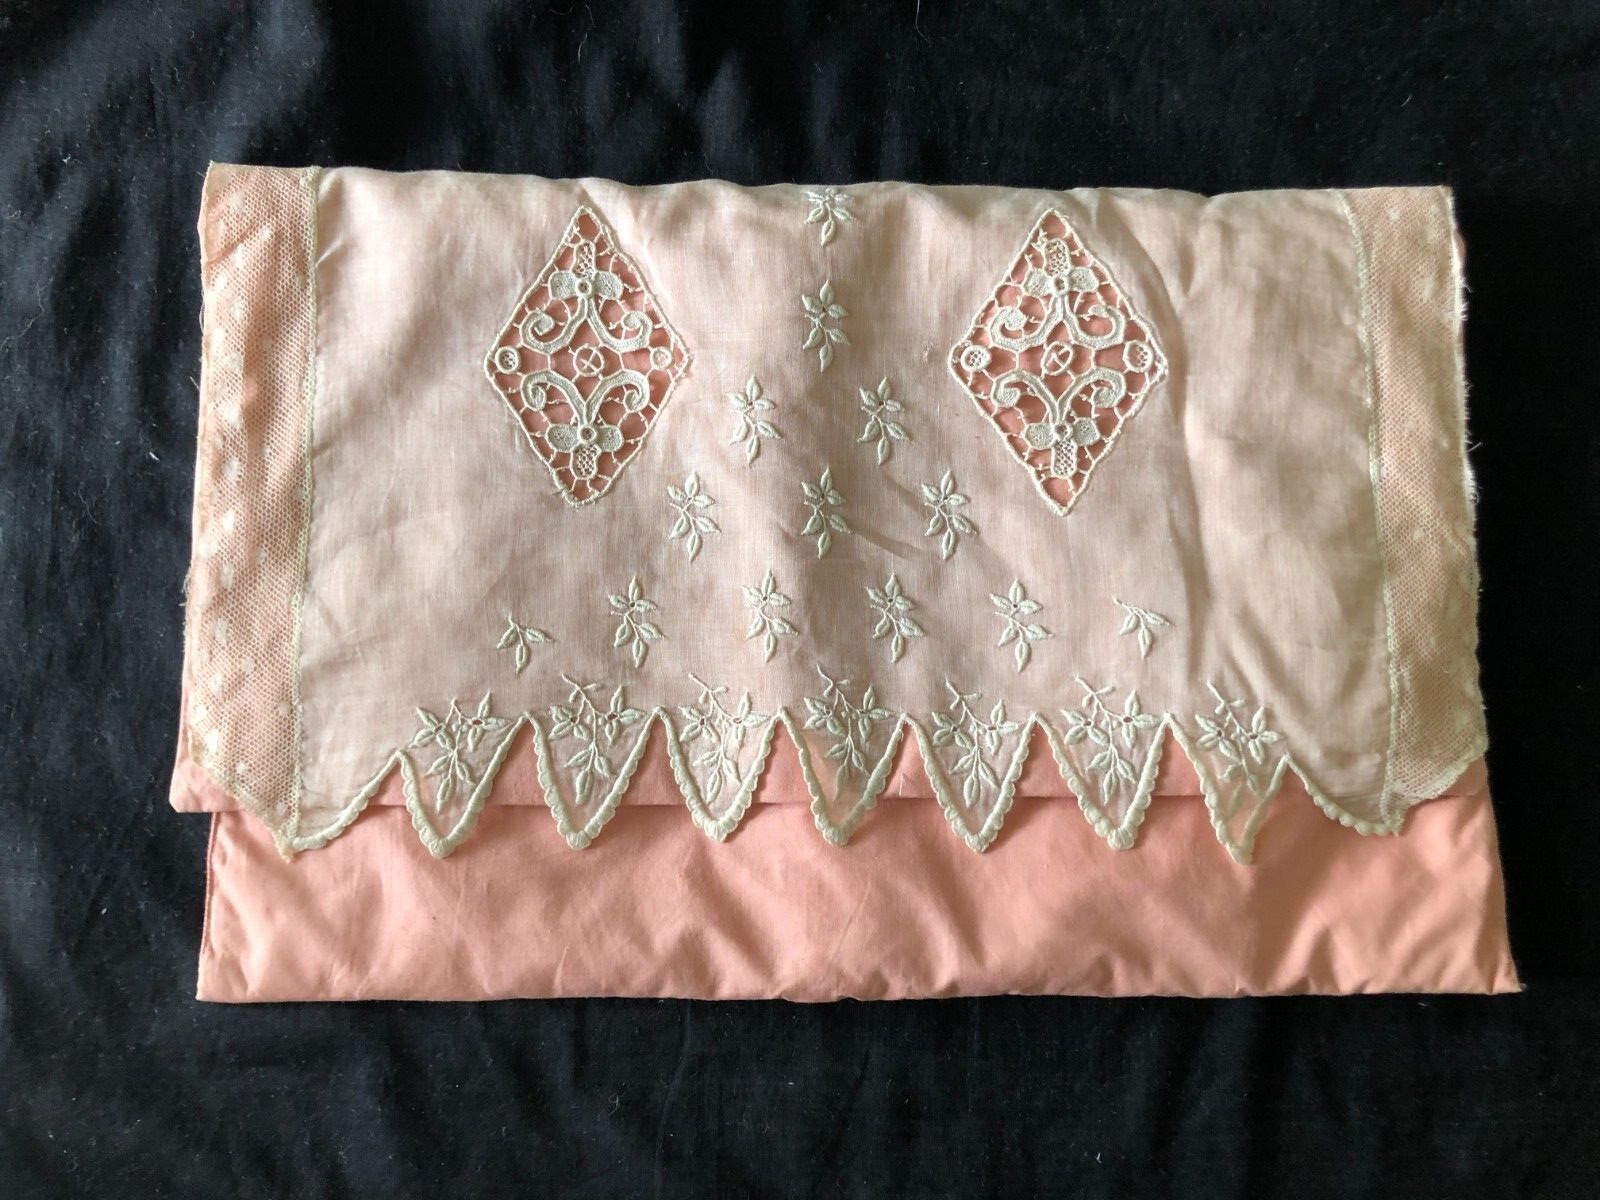 Antique French Pale Peach Embroidery Hand Lawn Cotton Lace Lingerie Case c1900s